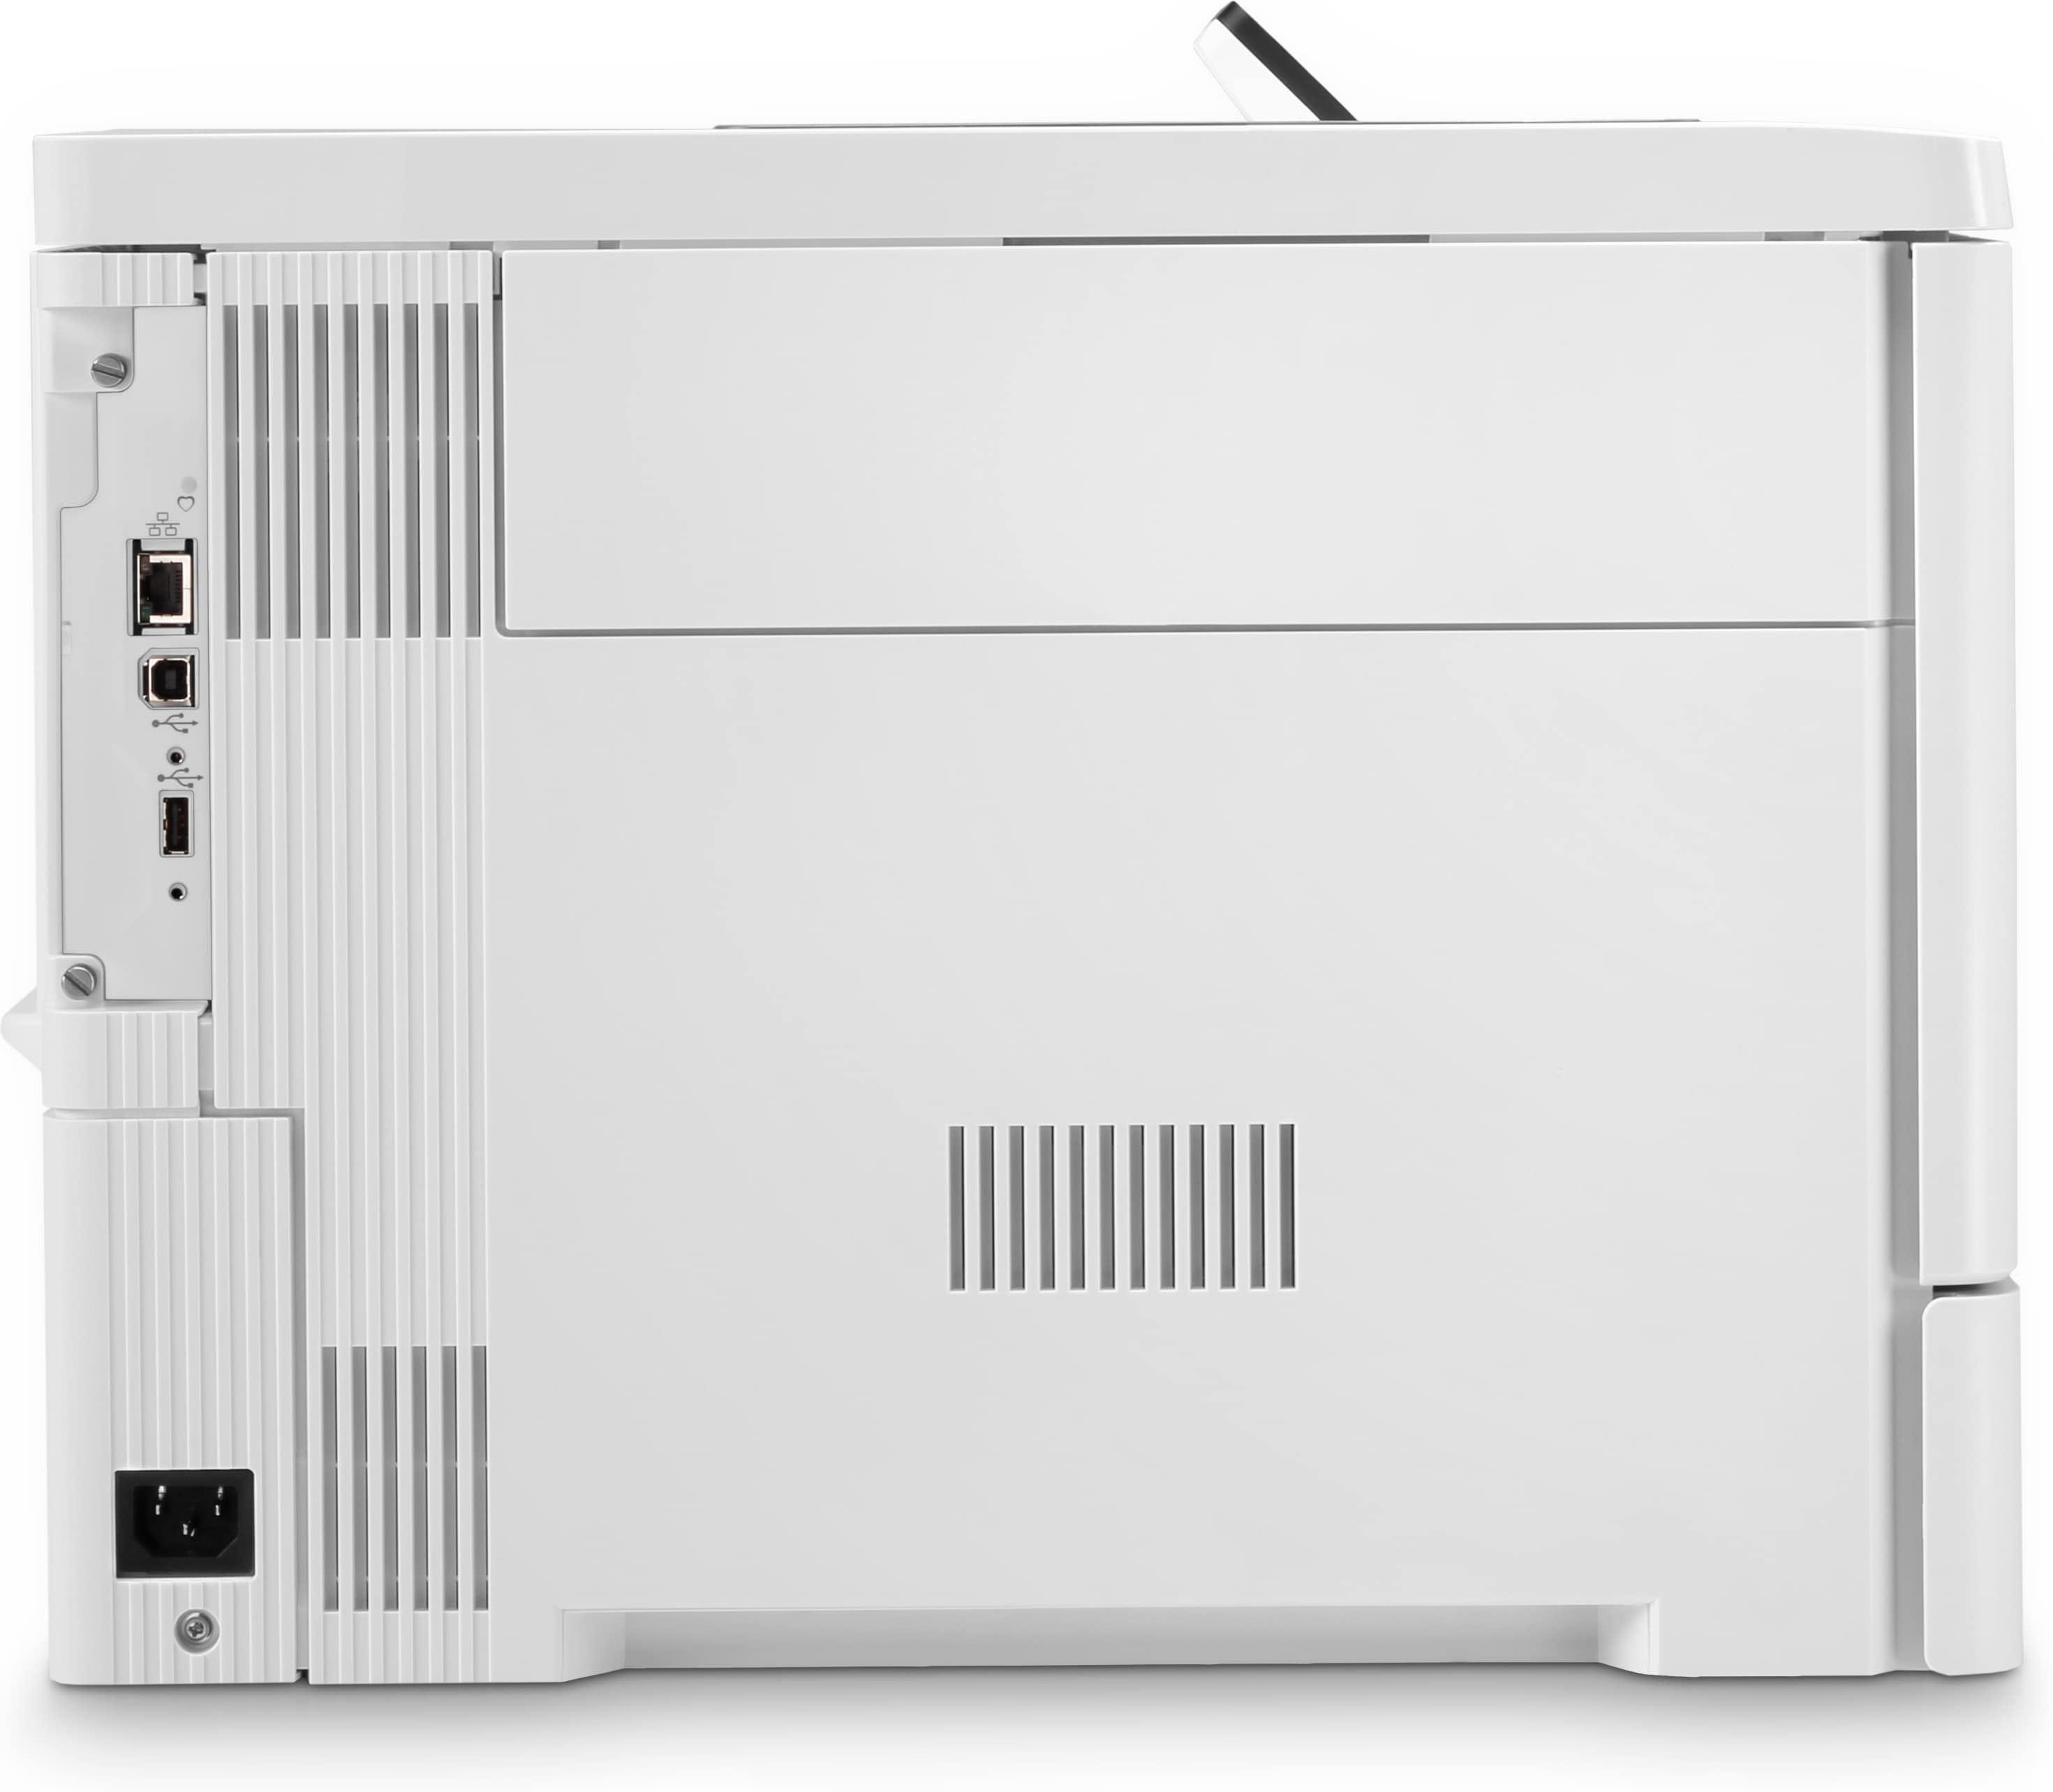 Stampante laser HP Color LaserJet Enterprise M554dn, Color, per Stampa, Porta USB frontale, Stampa fronte/retro [7ZU81A]